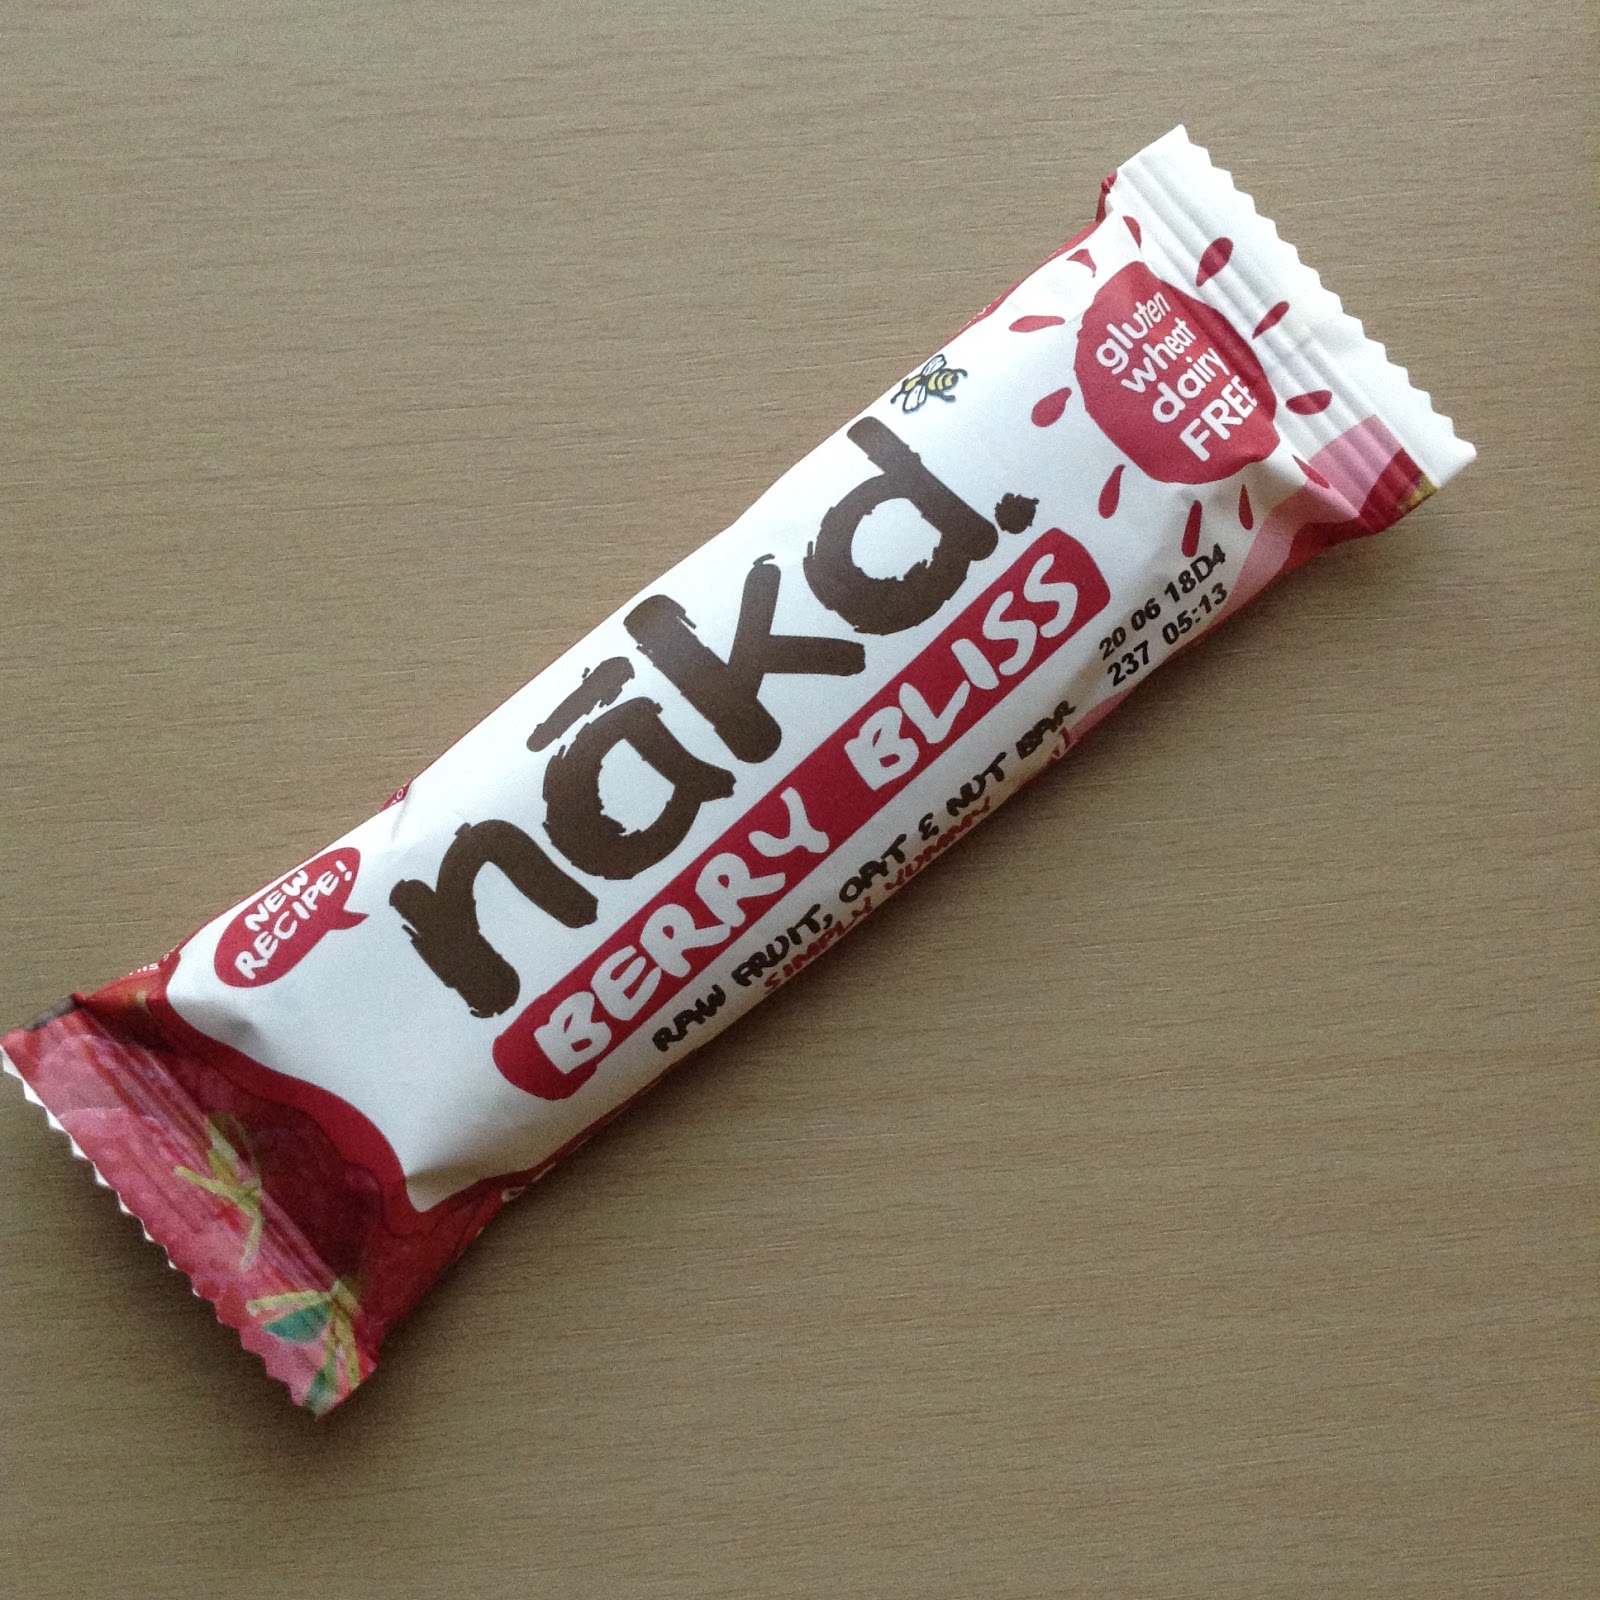 Eat Nakd Bar Review: Cashew, Berry Delight, Strawberry, Banana, Cocoa  Orange & Cocoa Delight 